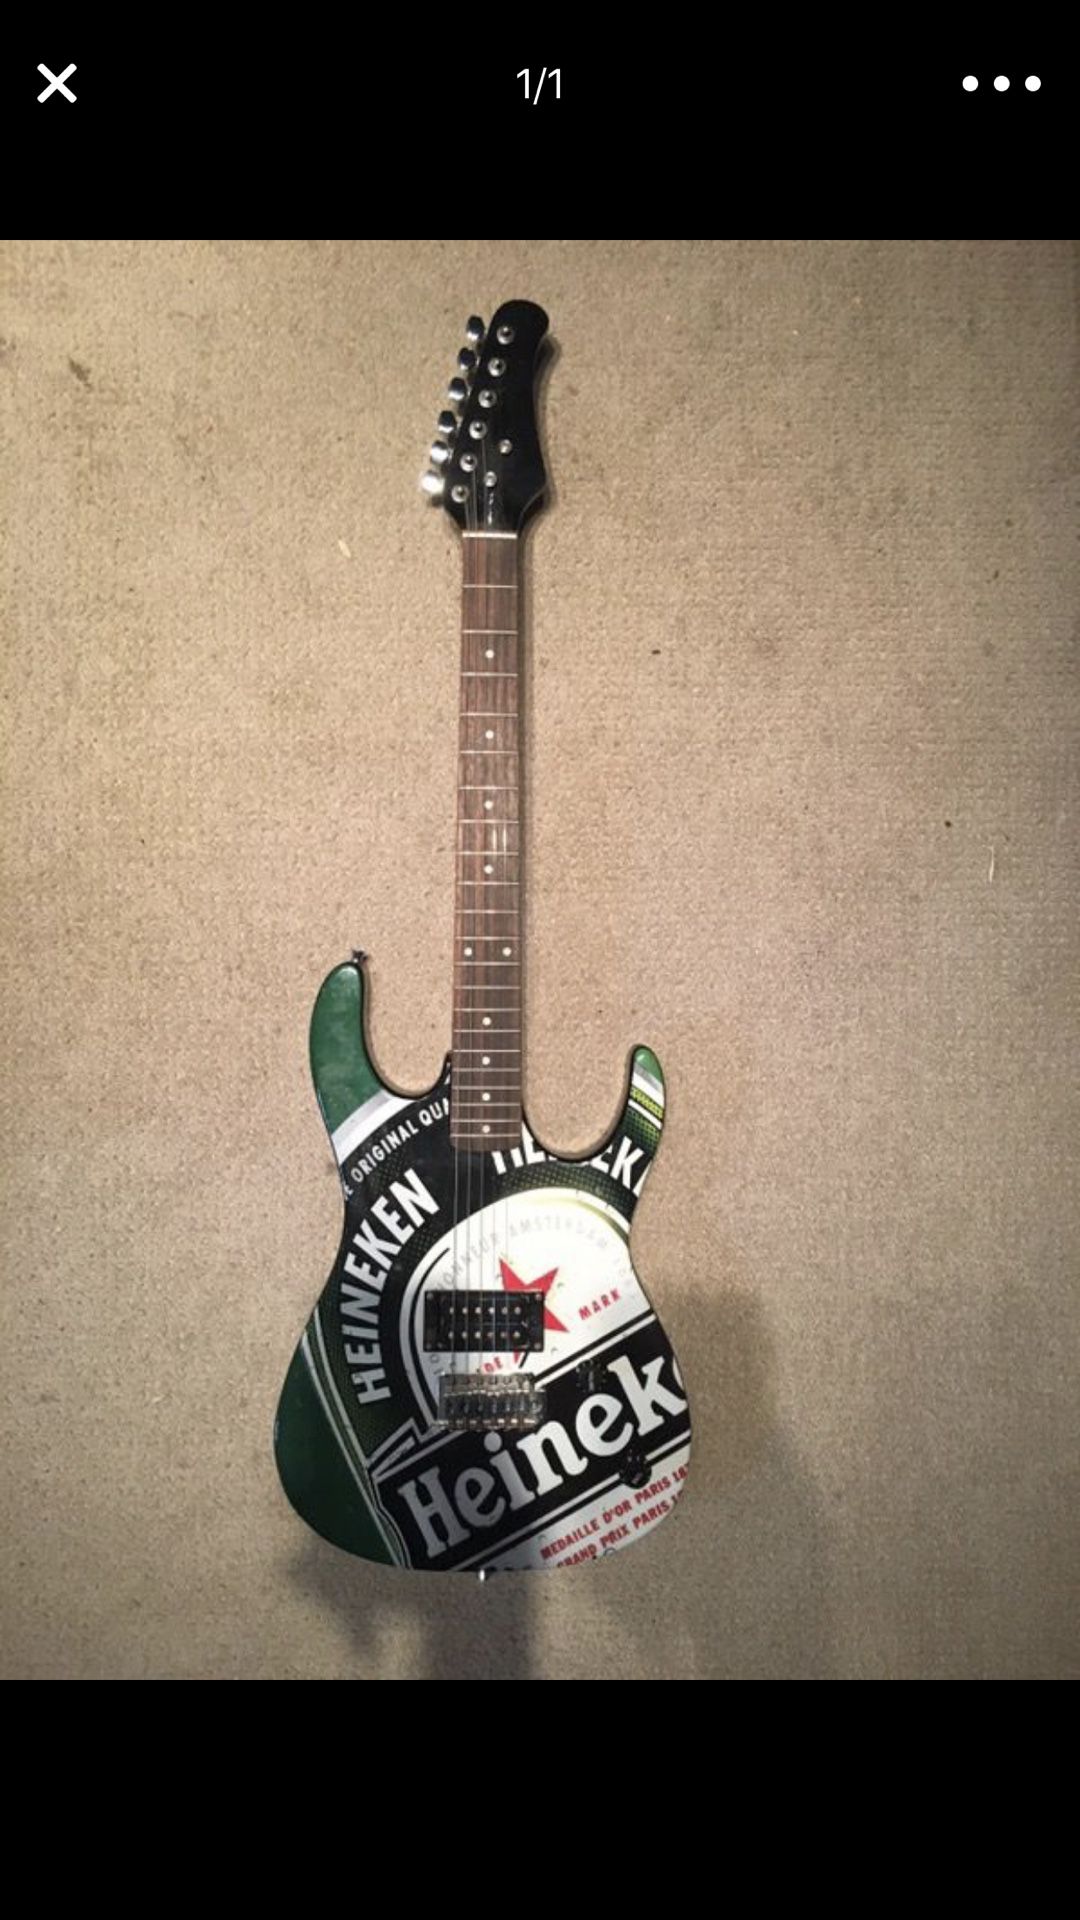 Heineken Electric Guitar